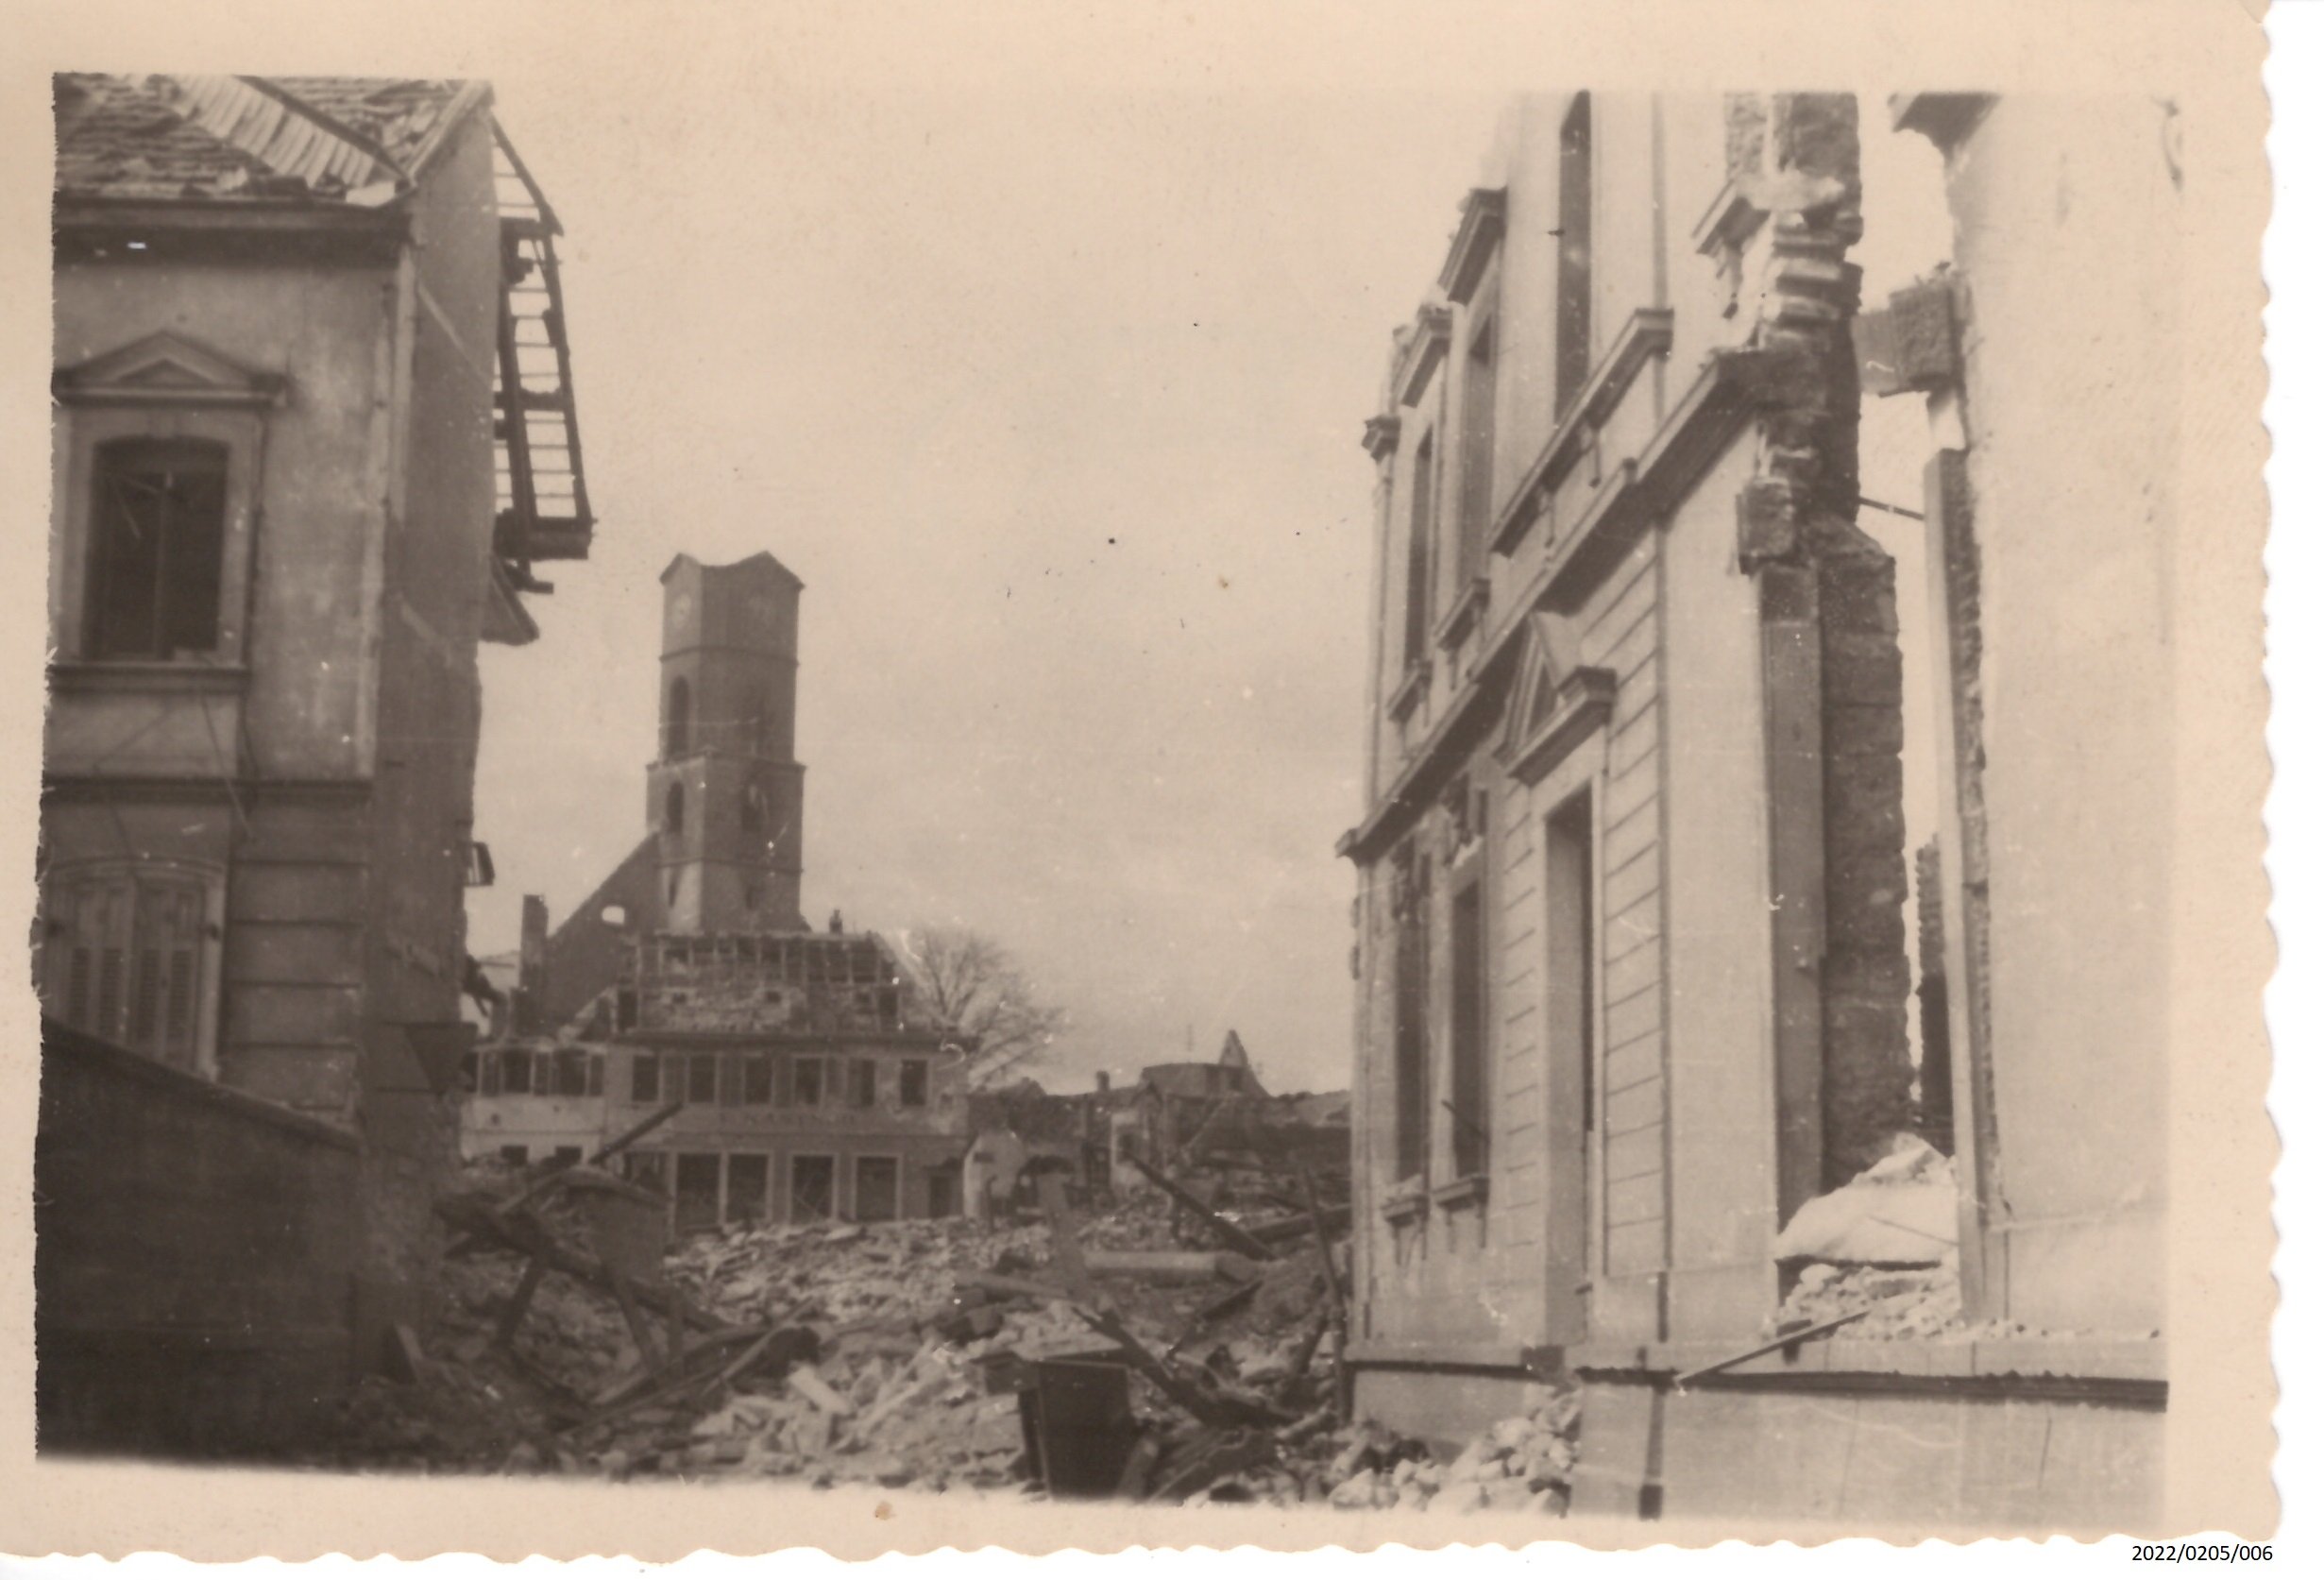 Fotos des zerstörten Bad Dürkheims nach 1945 (Stadtmuseum Bad Dürkheim im Kulturzentrum Haus Catoir CC BY-NC-SA)